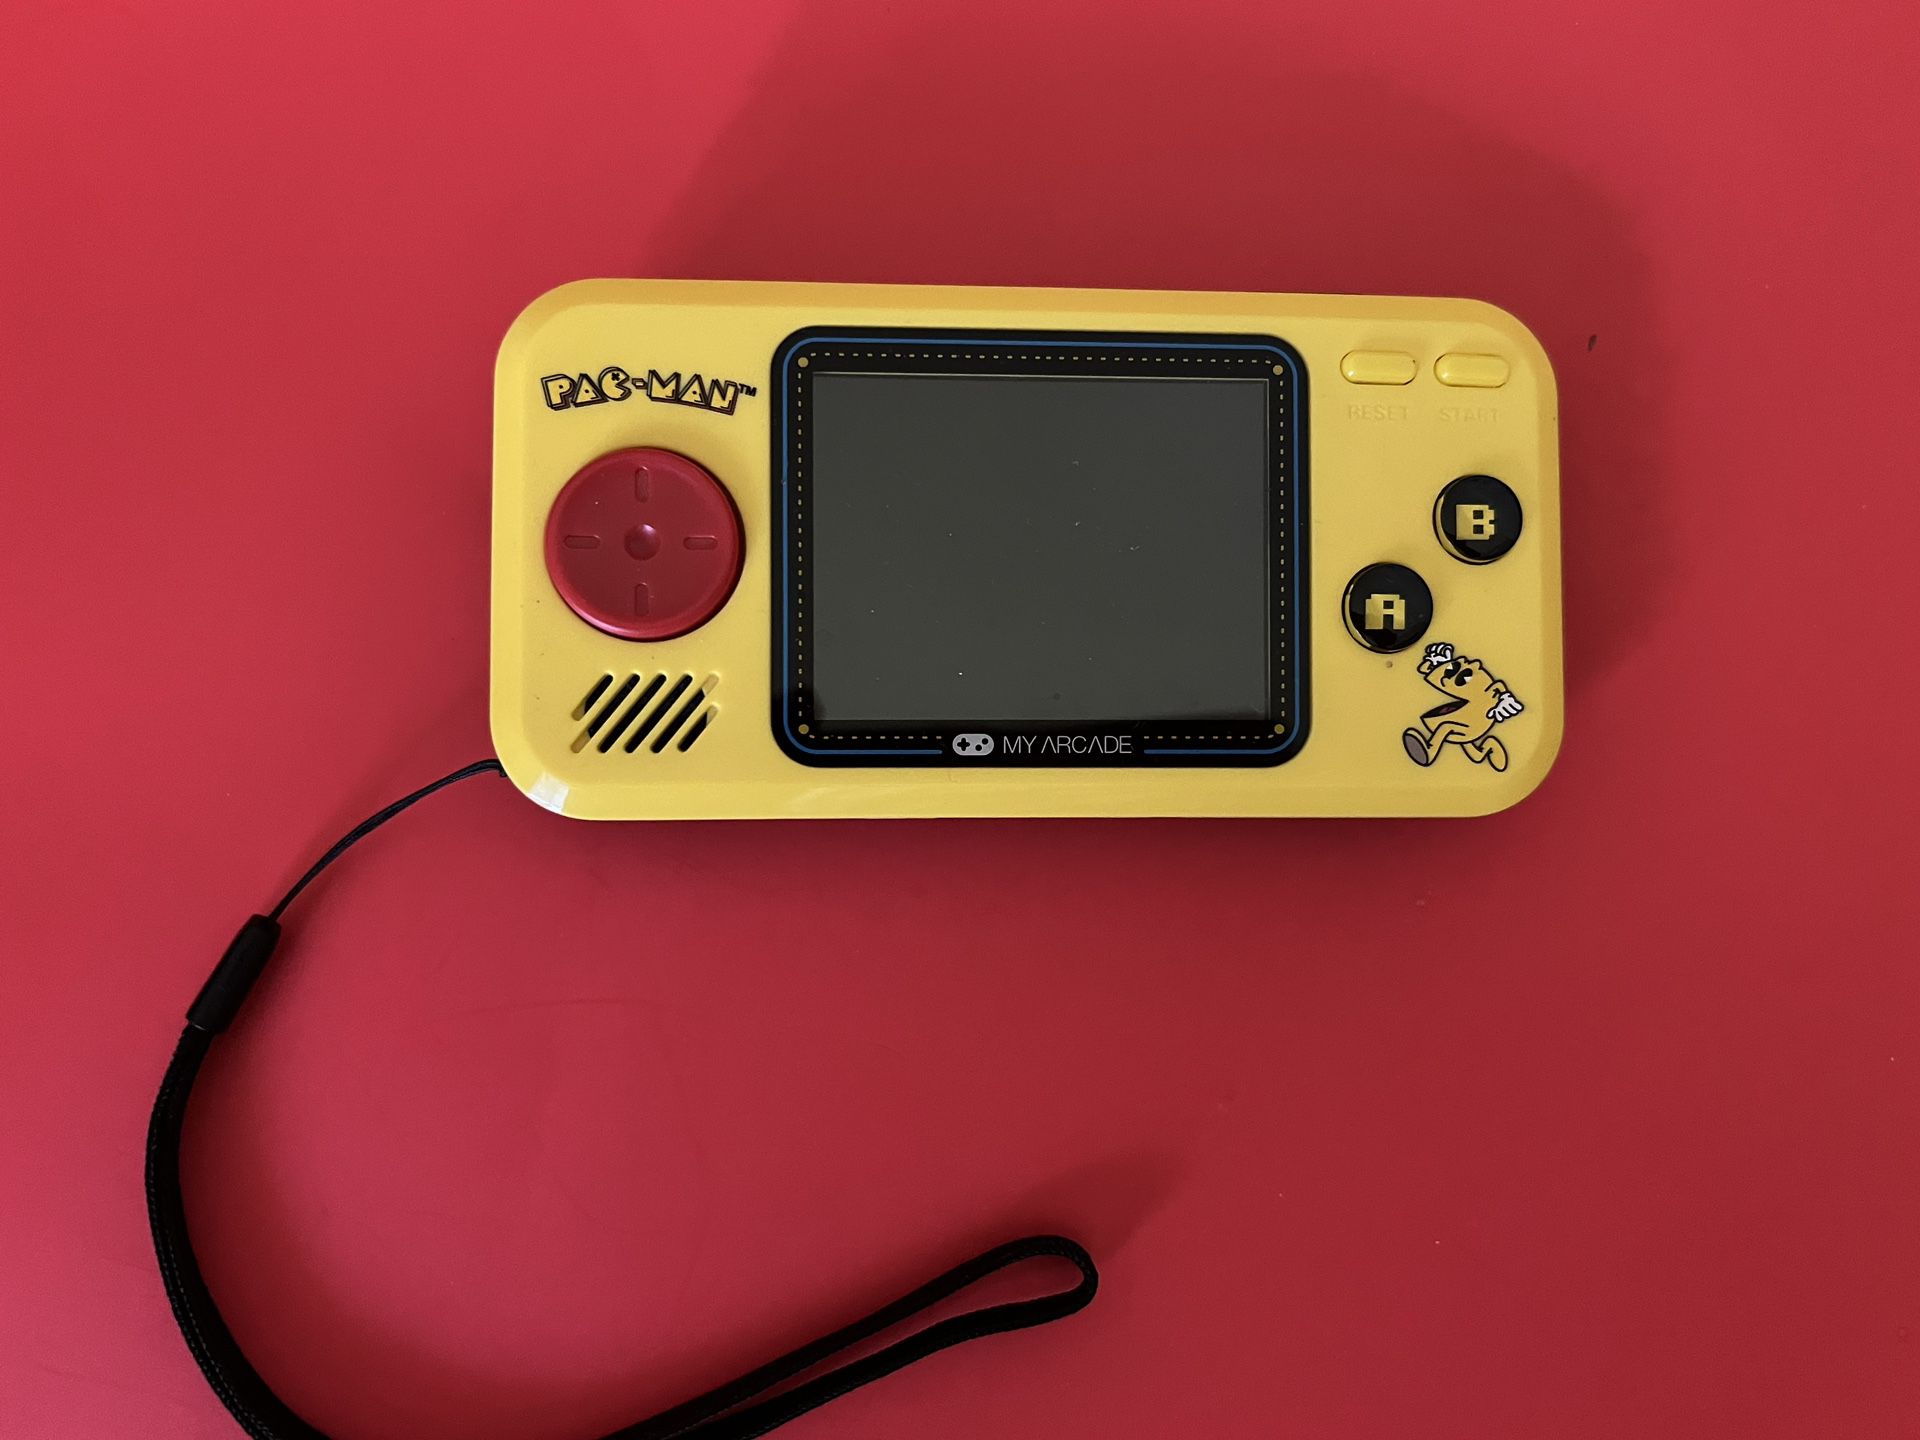 Pac-Man portable game